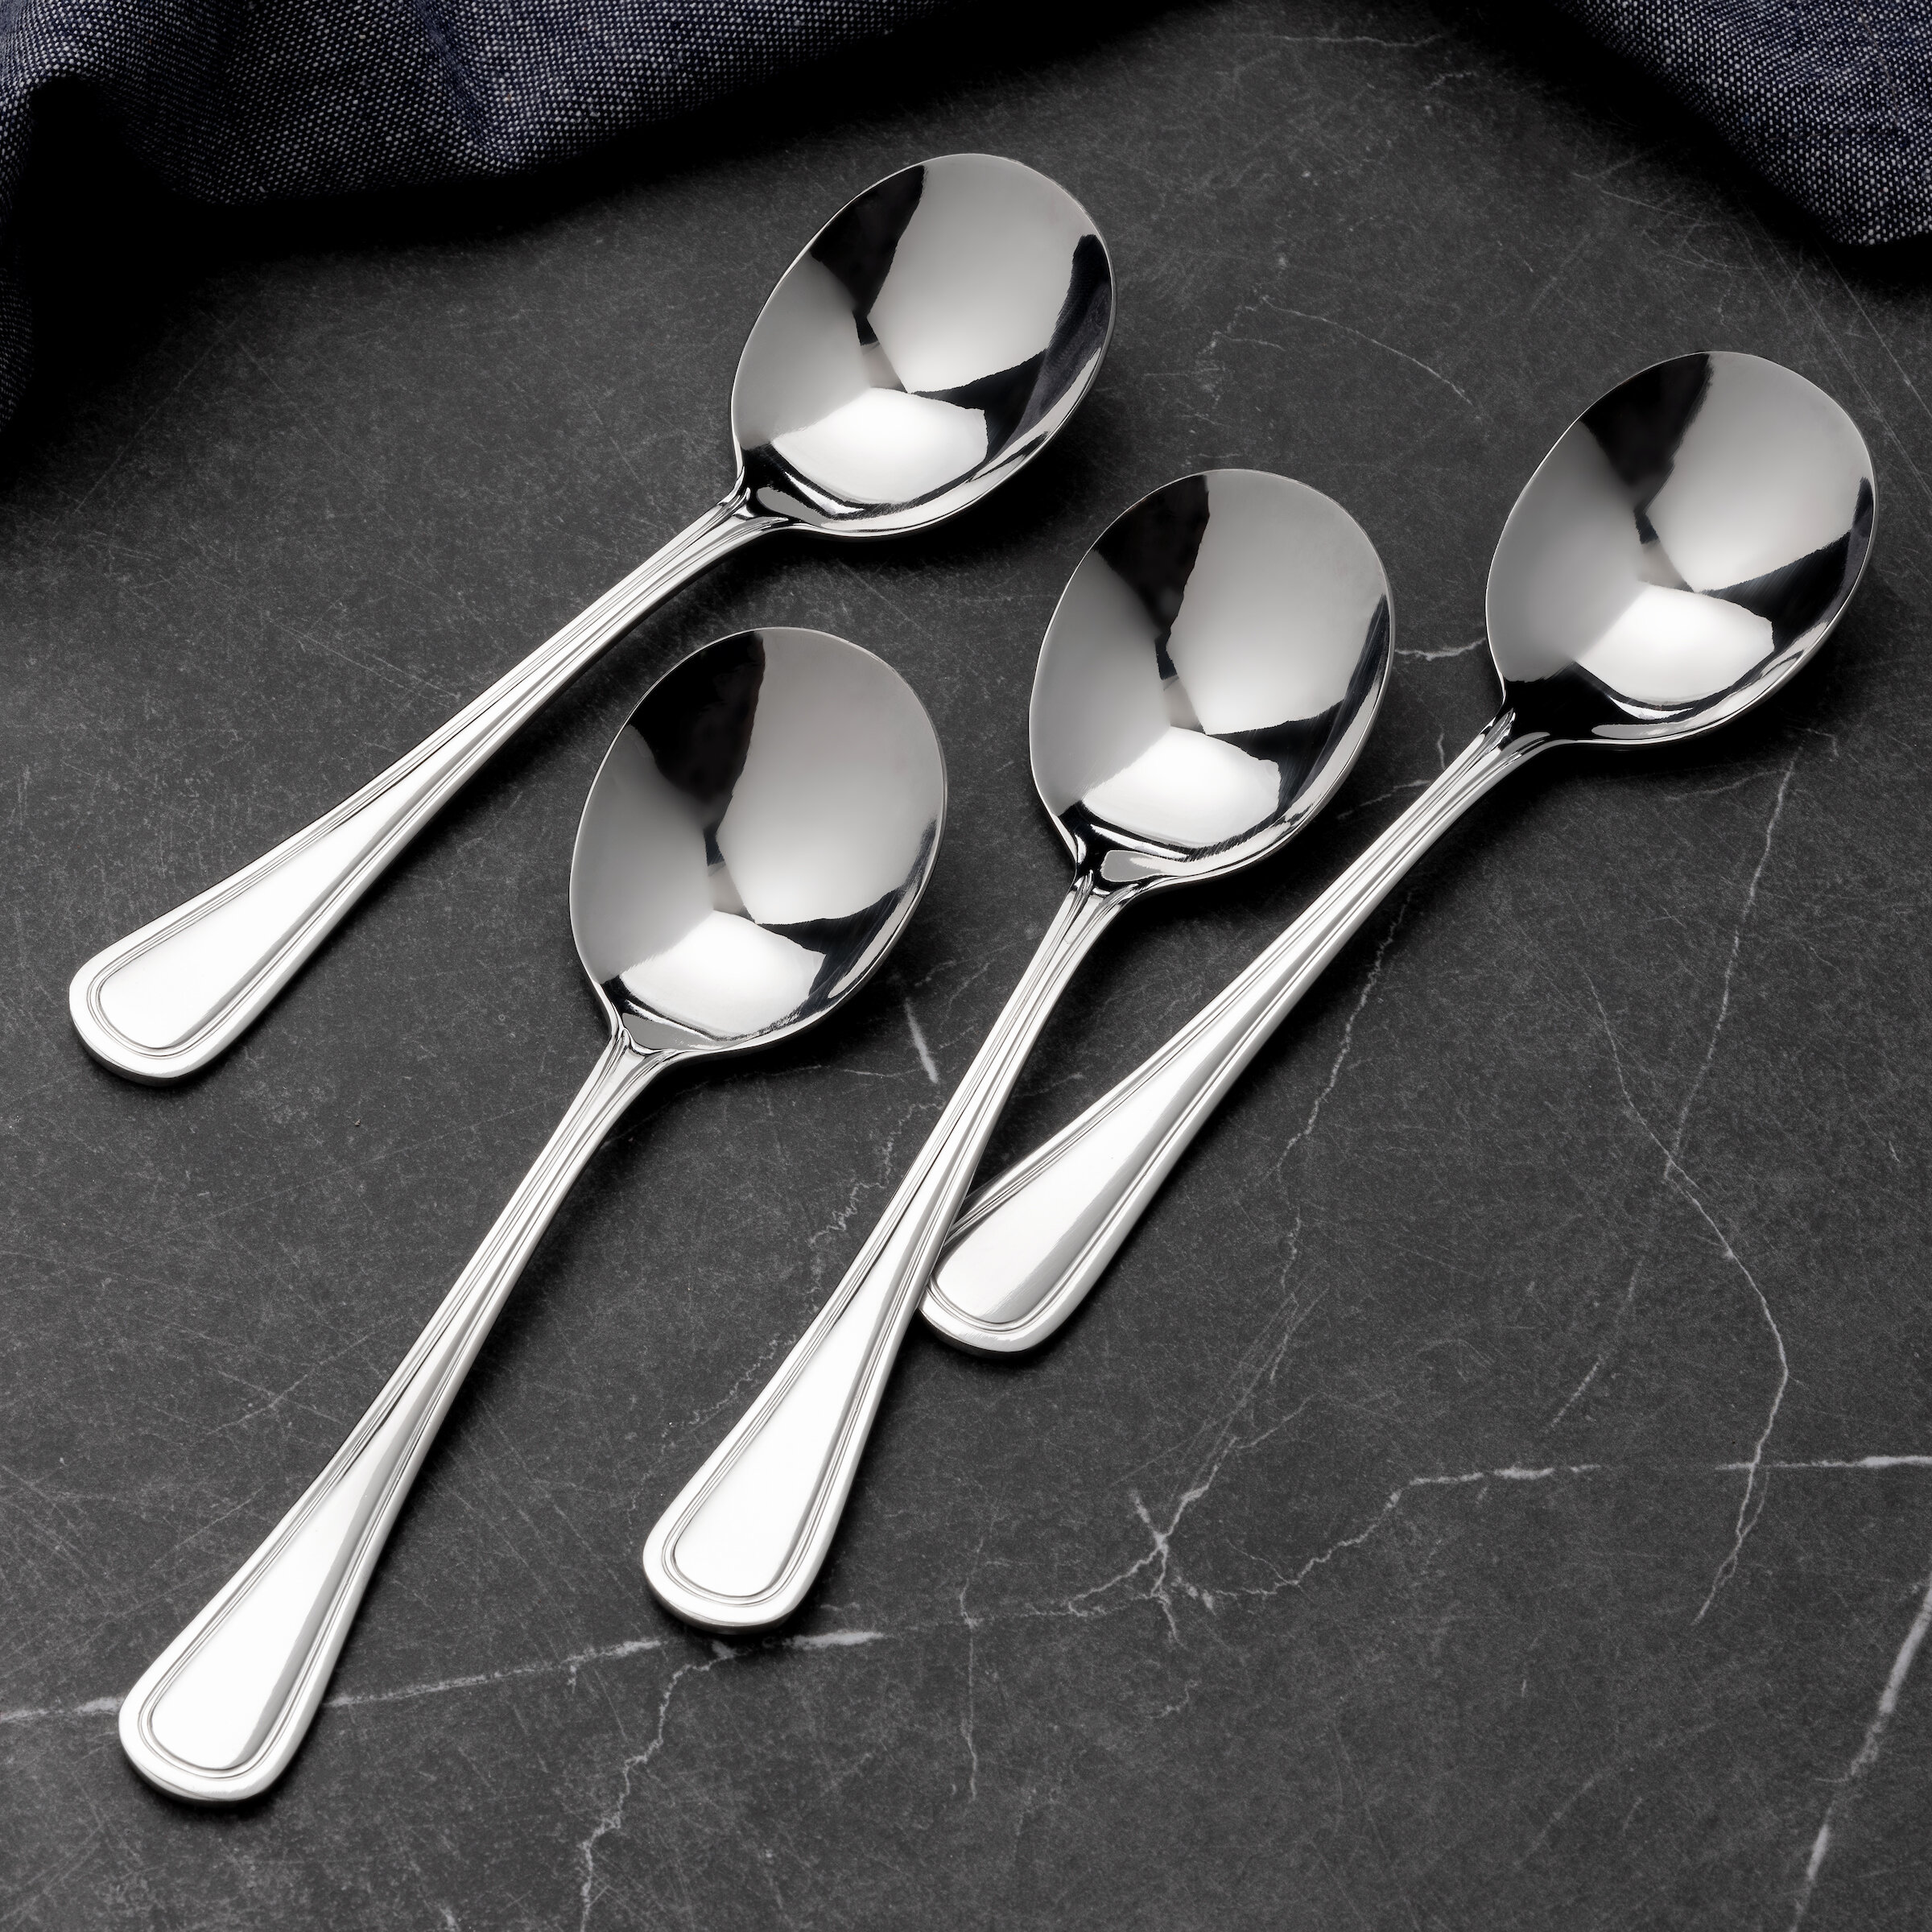 Oneida New Rim II 18/0 Stainless Steel Tablespoon/Serving Spoons